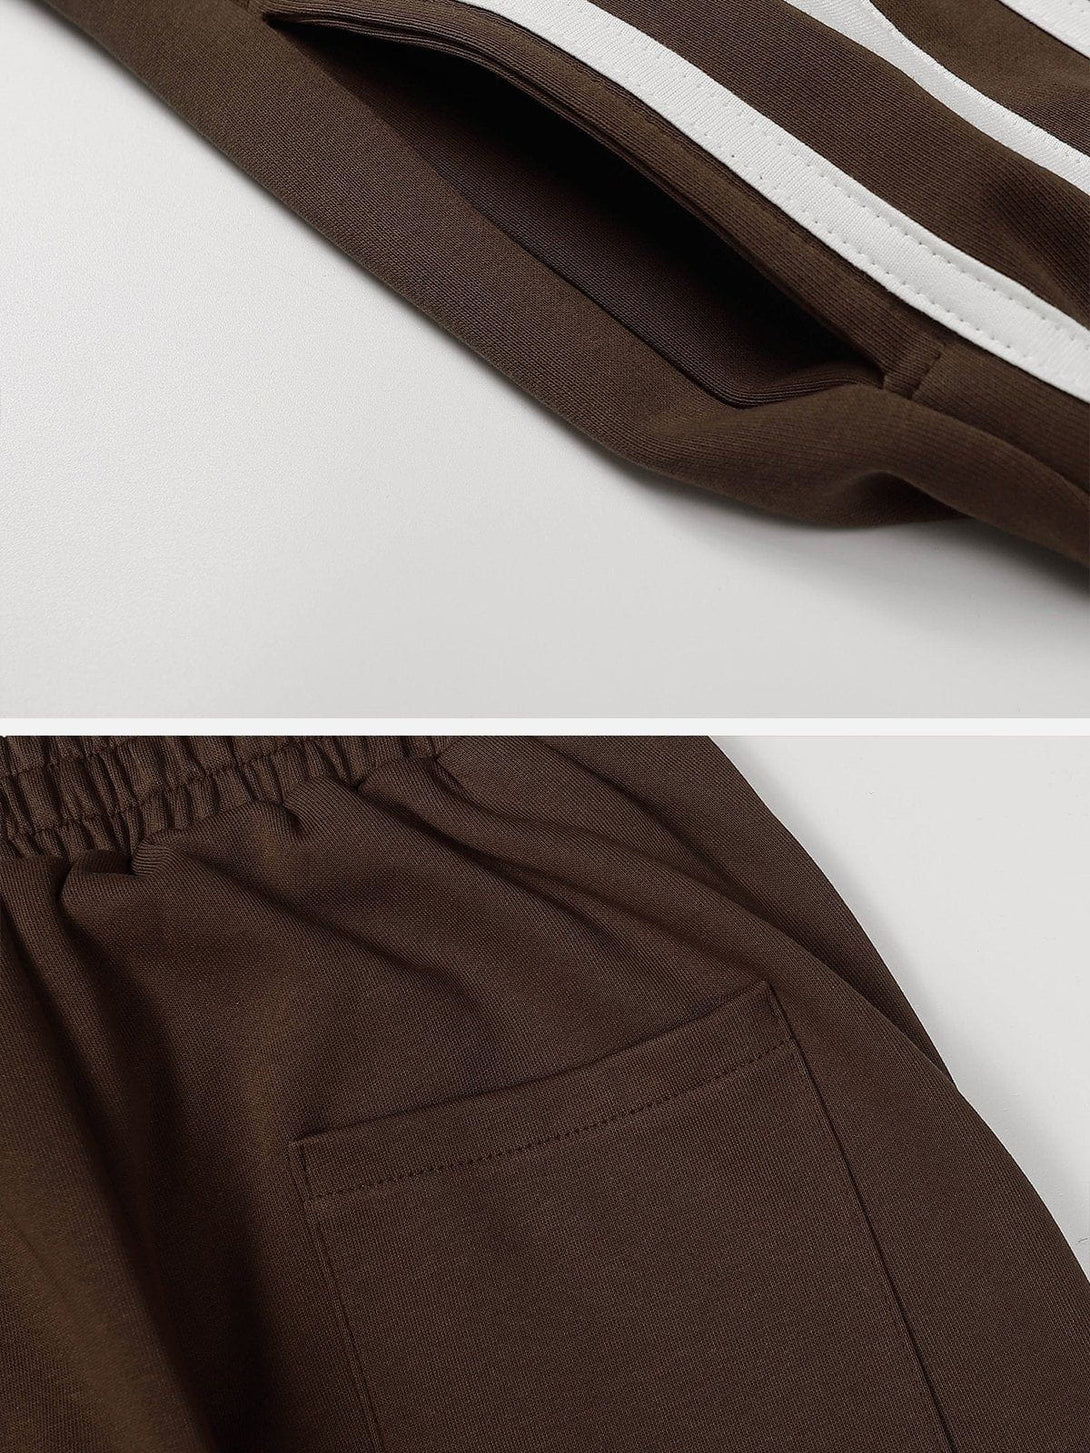 Levefly - Vertical Stripe Drawstring Sweatpants - Streetwear Fashion - levefly.com